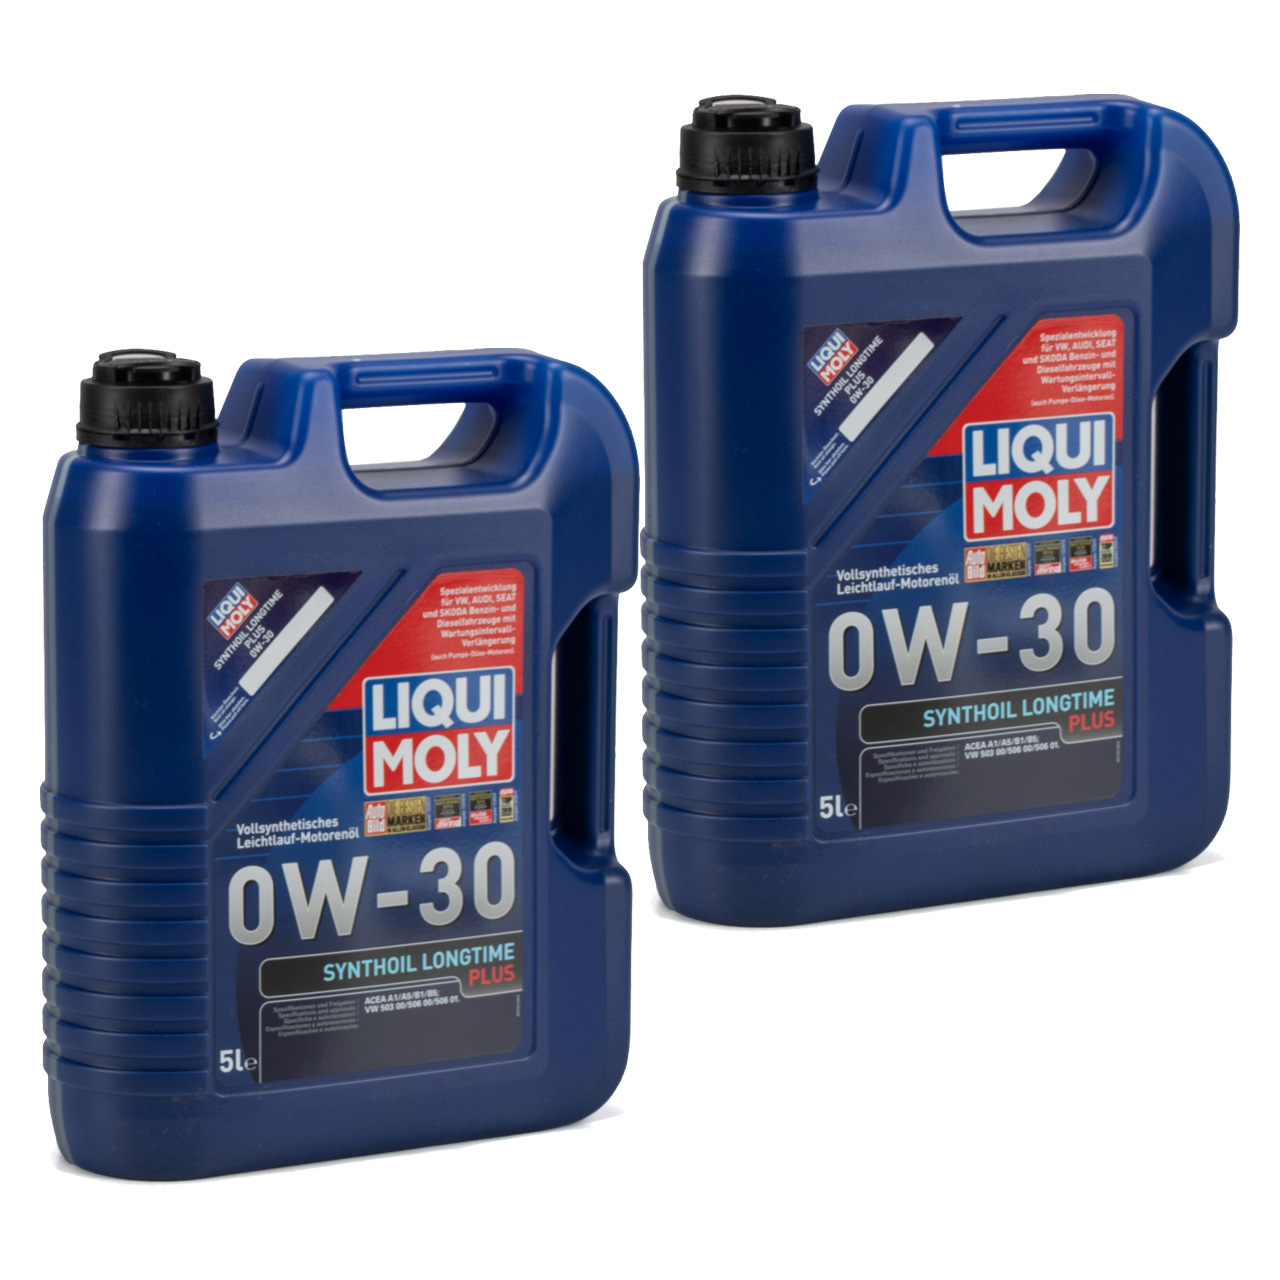 LIQUI MOLY SYNTHOIL LONGTIME PLUS Motoröl Öl 0W30 VW 503/506.00 - 10L 10 Liter